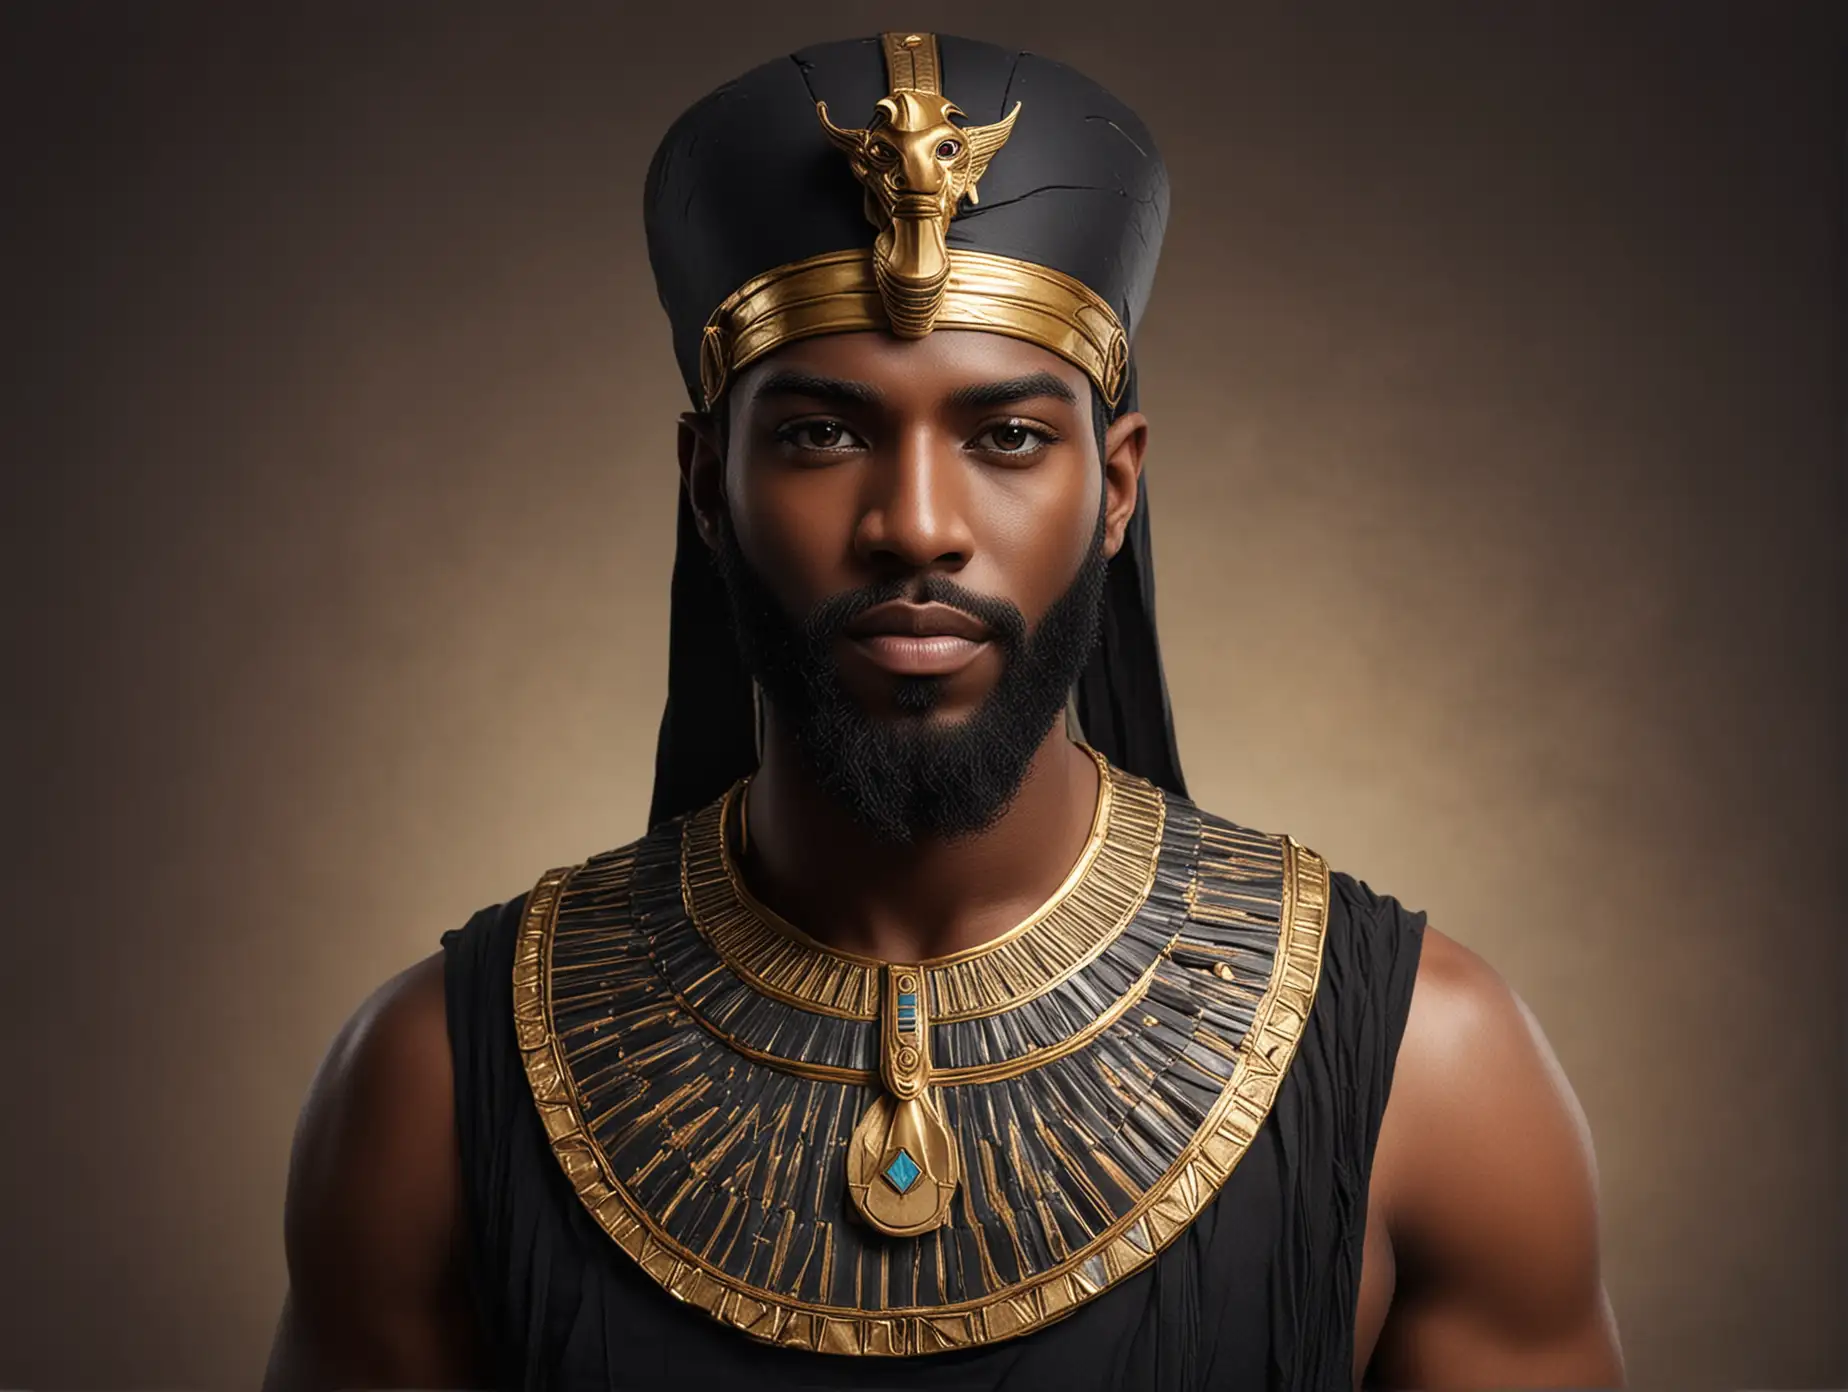 Black Handsome Egyptian Pharaoh with a Beard